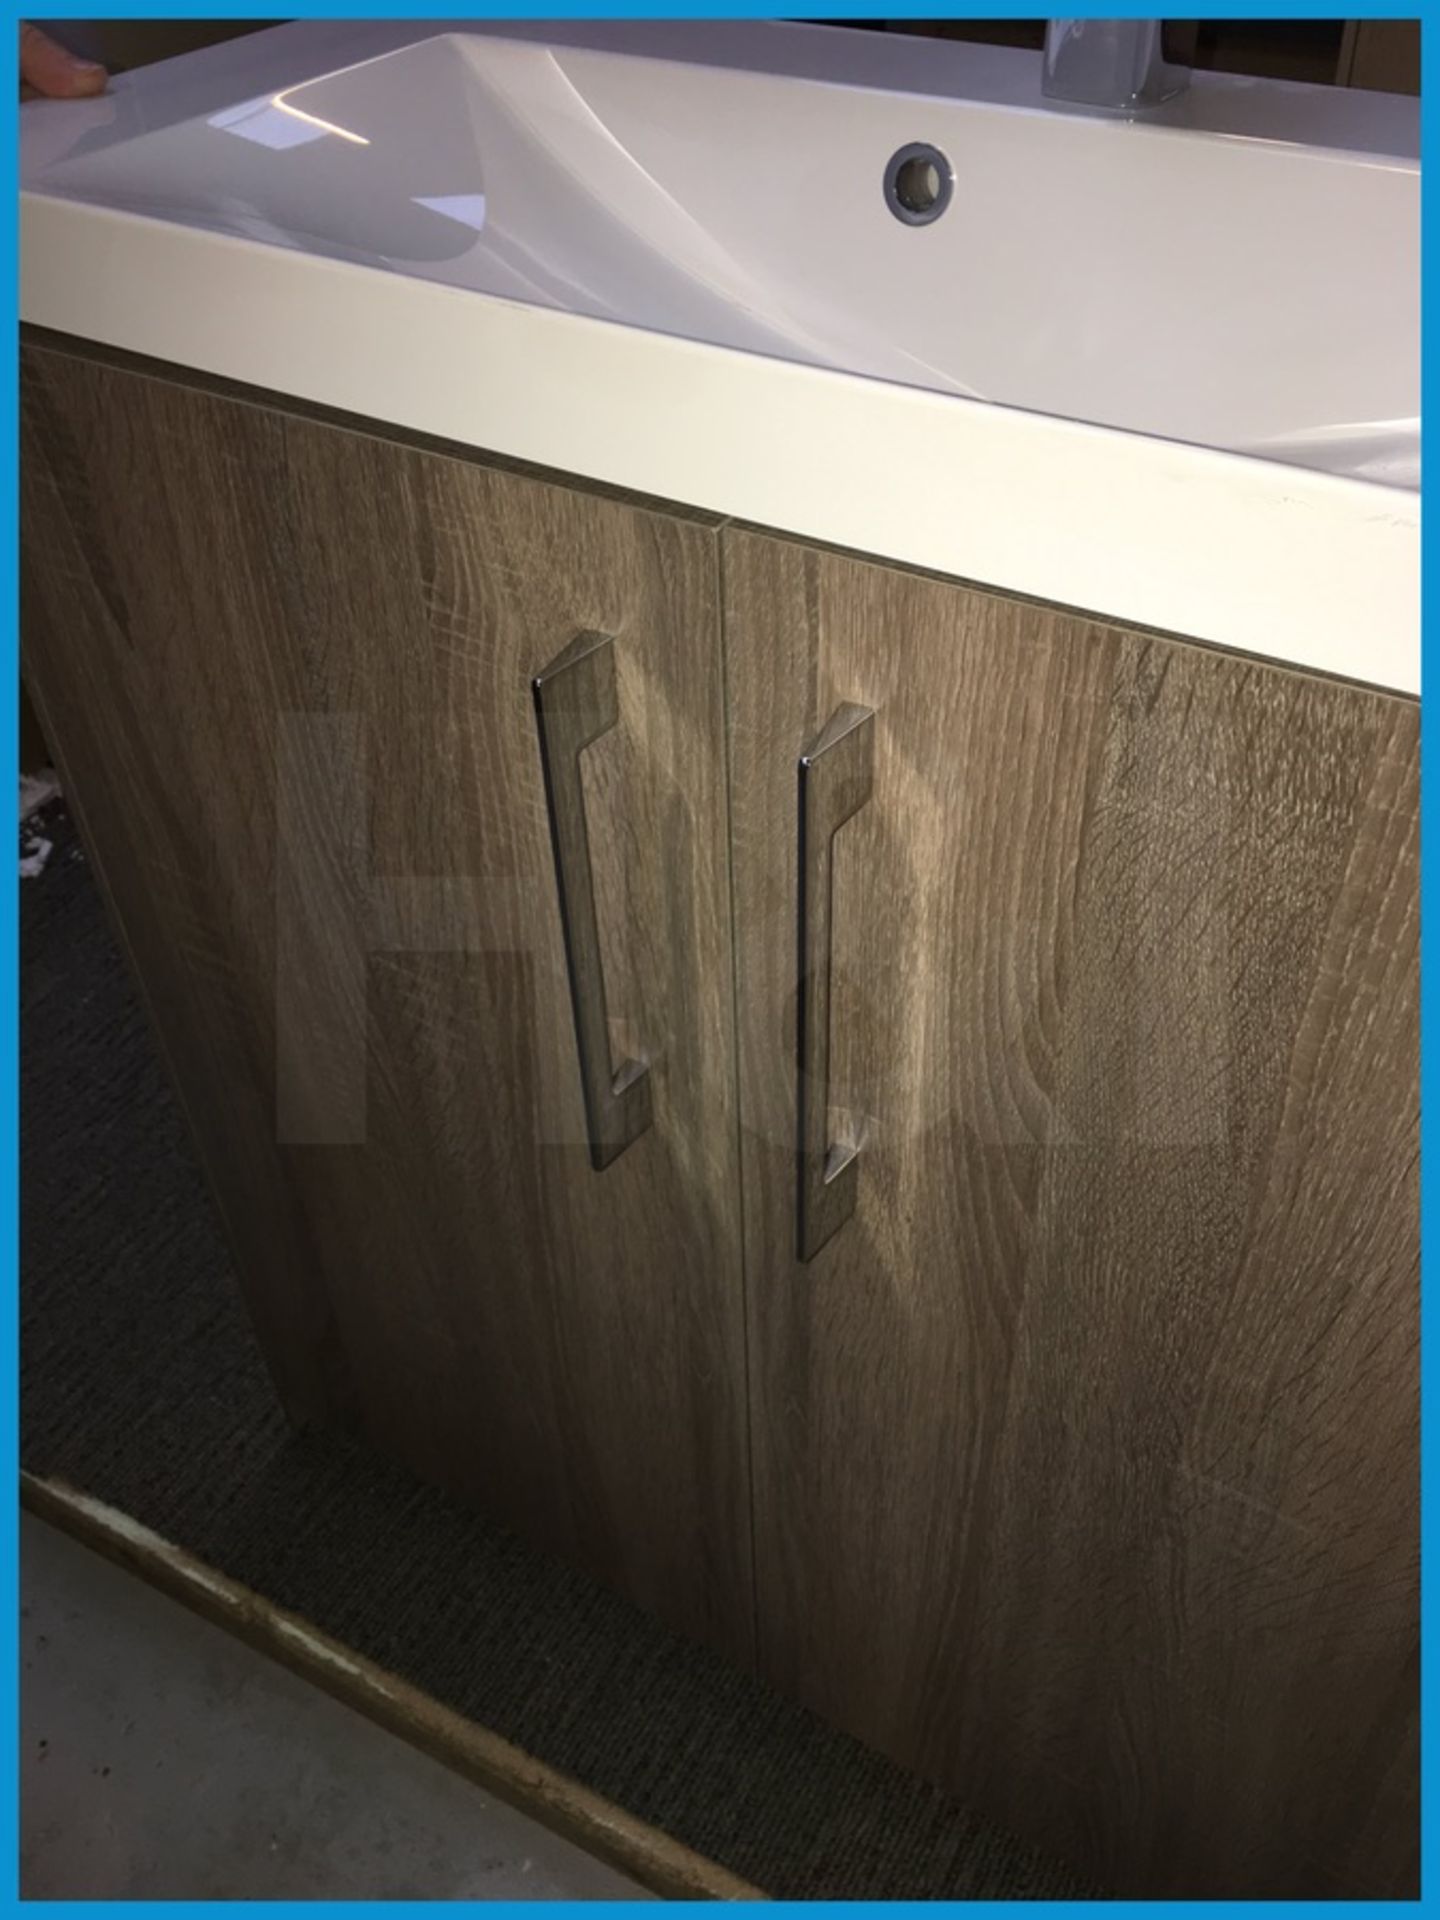 Designer R2 floor standing vanity unit in Havana oak finish with polycarbonate basin and designer - Image 8 of 8